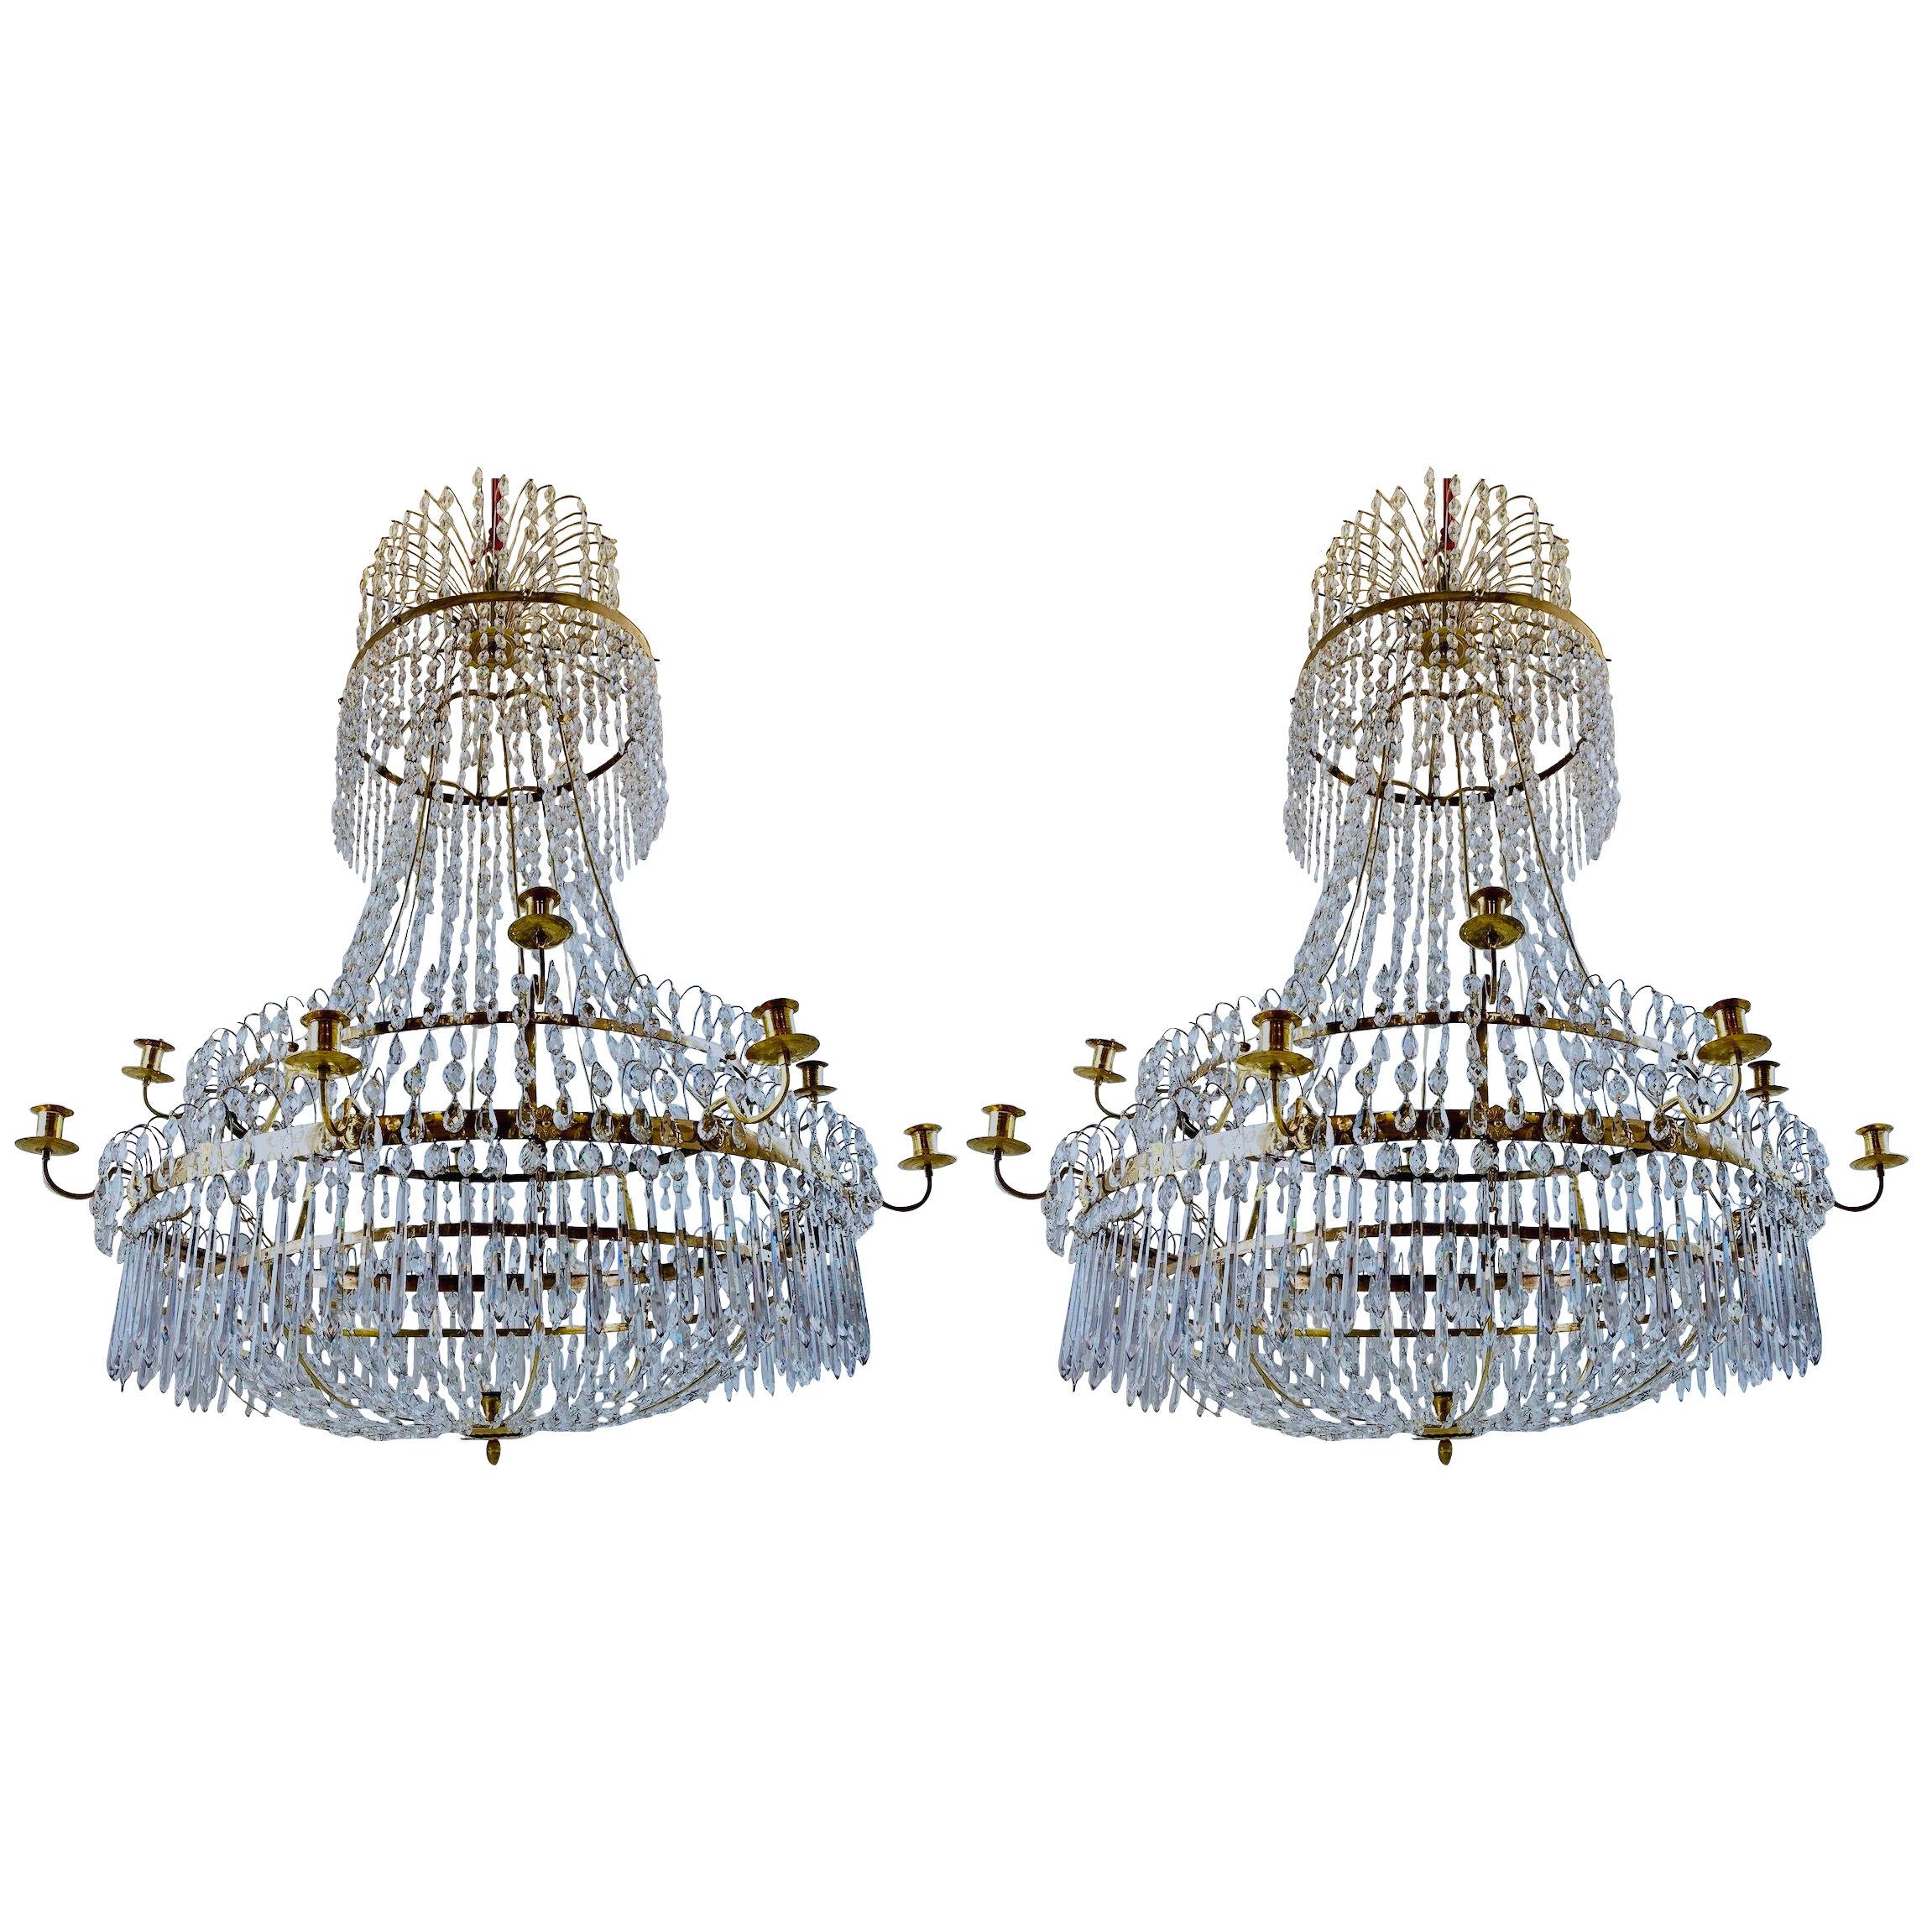 Pair of Gustavian chandeliers made around year 1800.